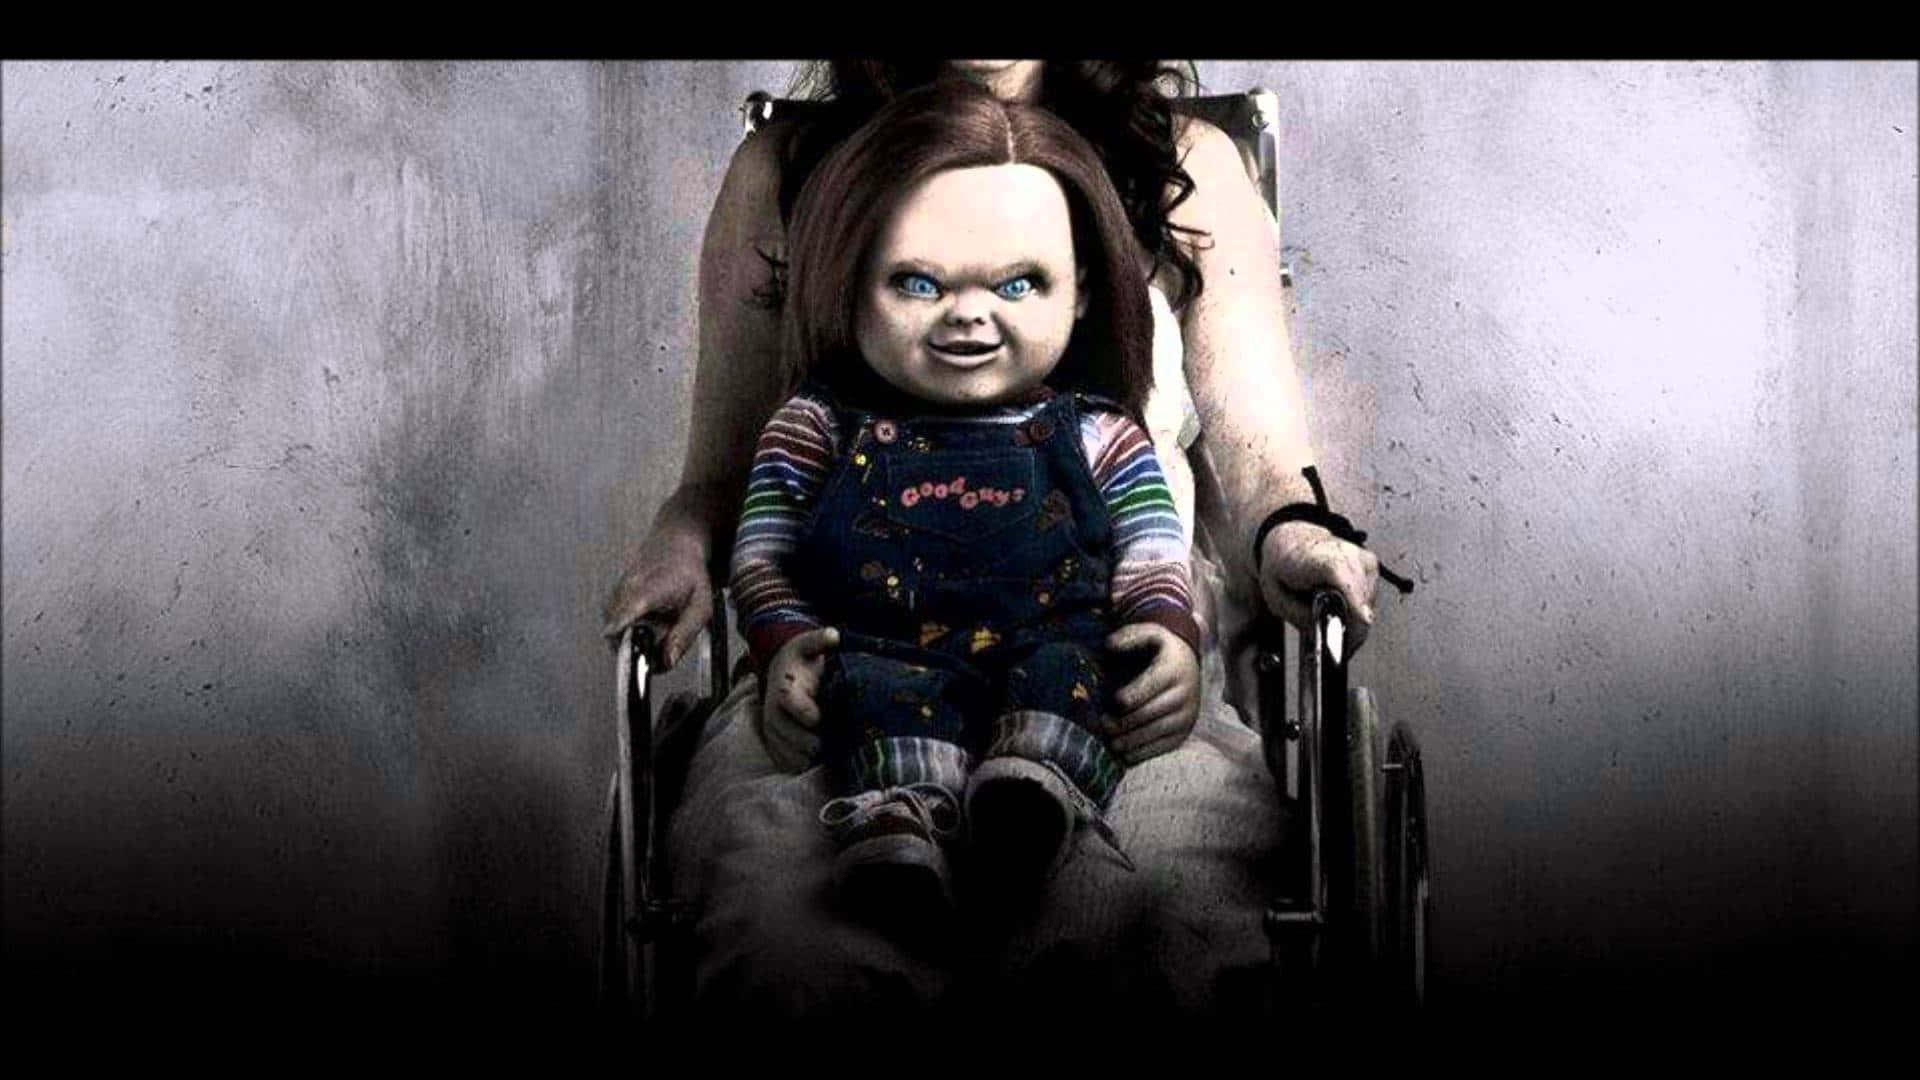 Be Afraid of Chucky Doll! Wallpaper